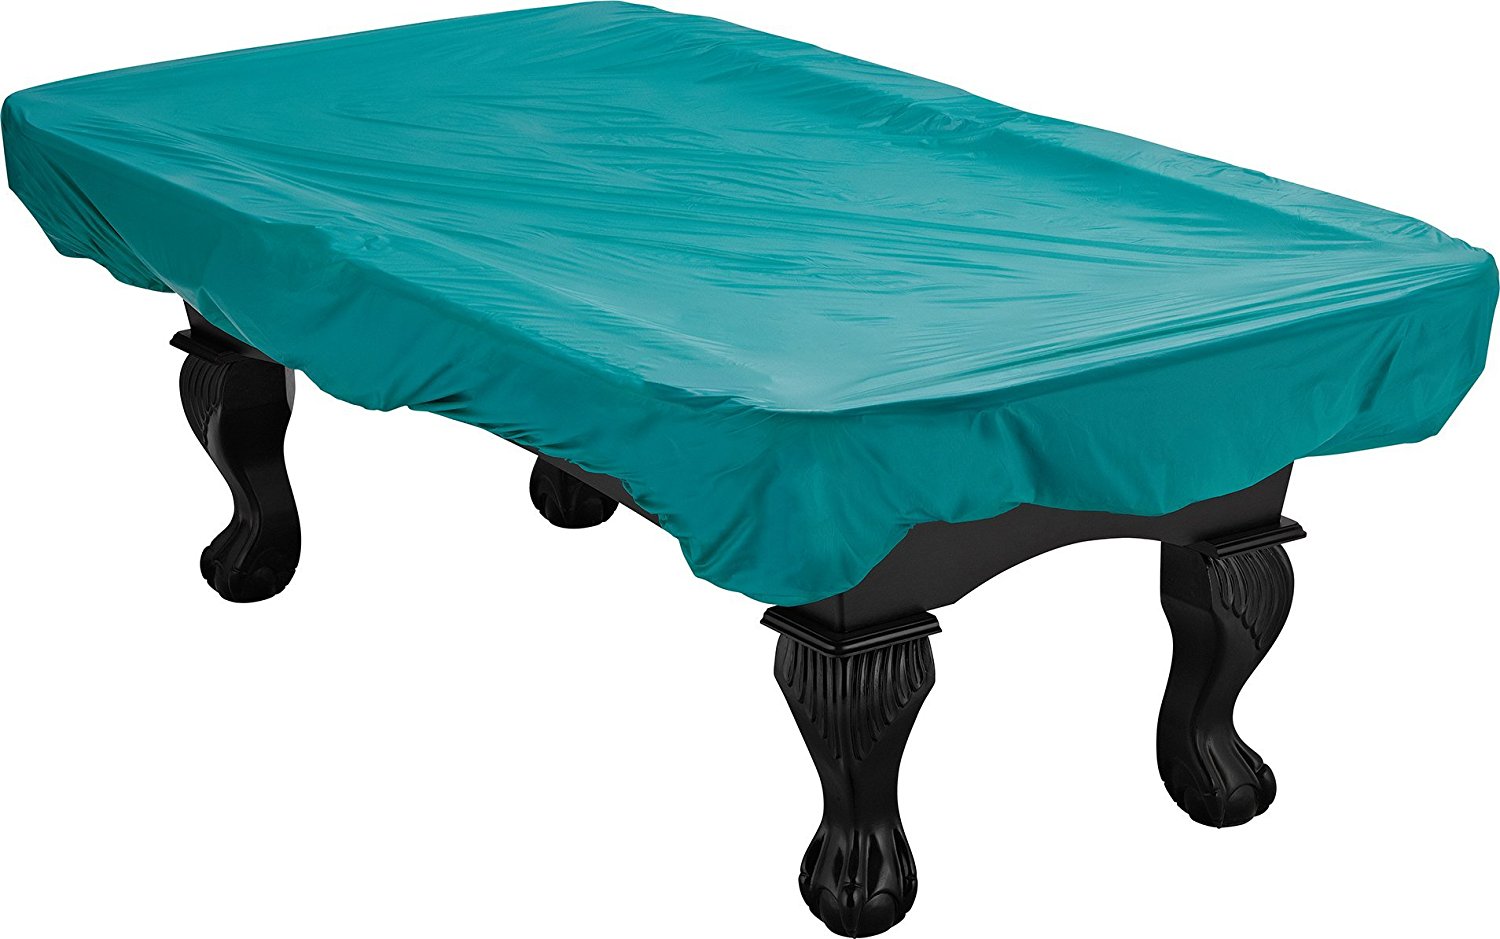 Viper Billiard/Pool Table Accessory: Protective Slip Cover, One Size Fits All